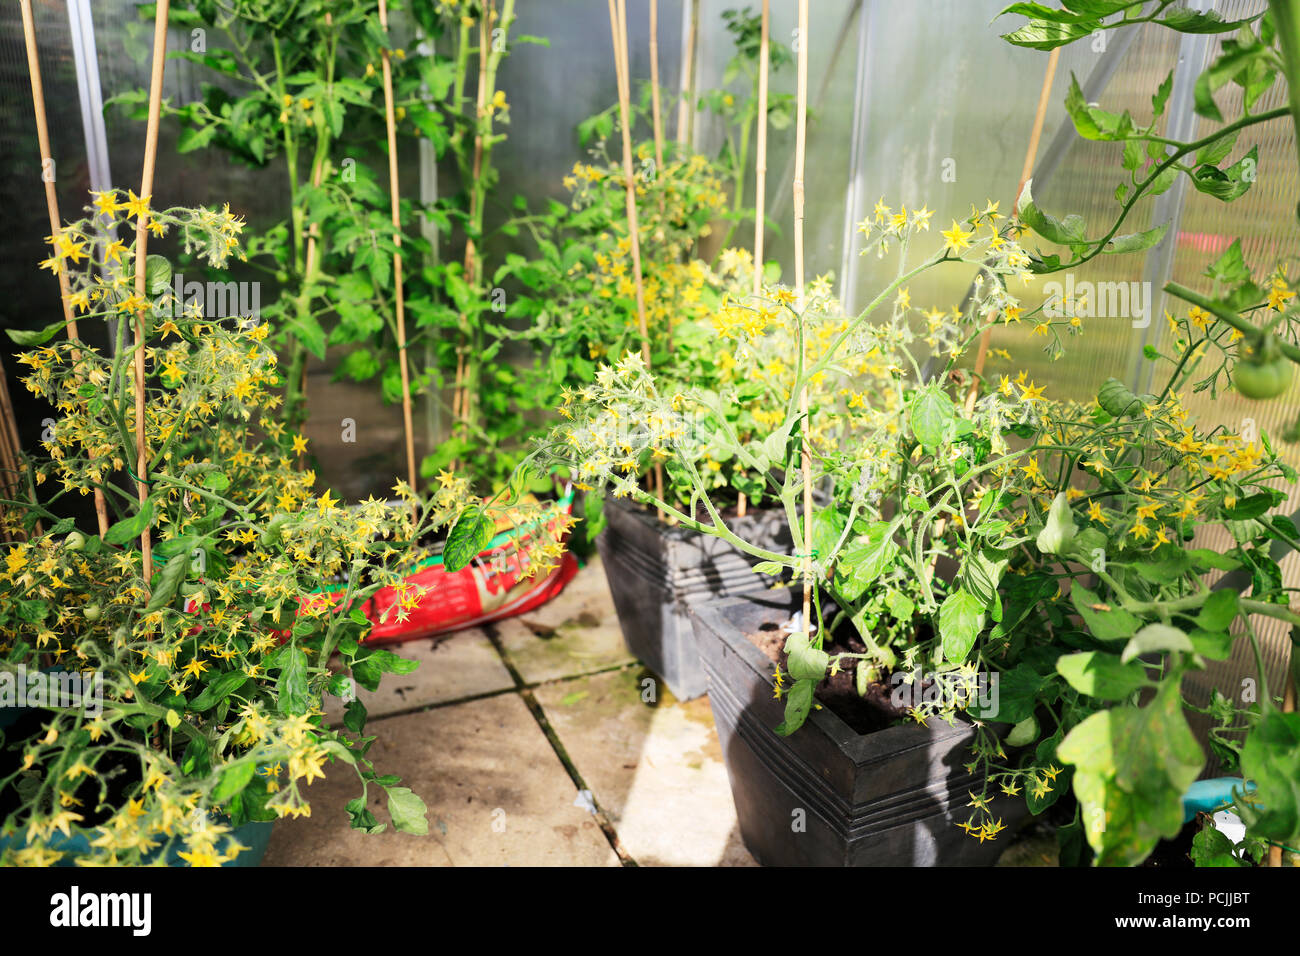 Tomato plants, growing tomatoes, greenhouse tomatoes, green tomatoes, growbags, tomatoes in greenhouse, tomatoes in grow bags, grow bag, grow bags, Stock Photo